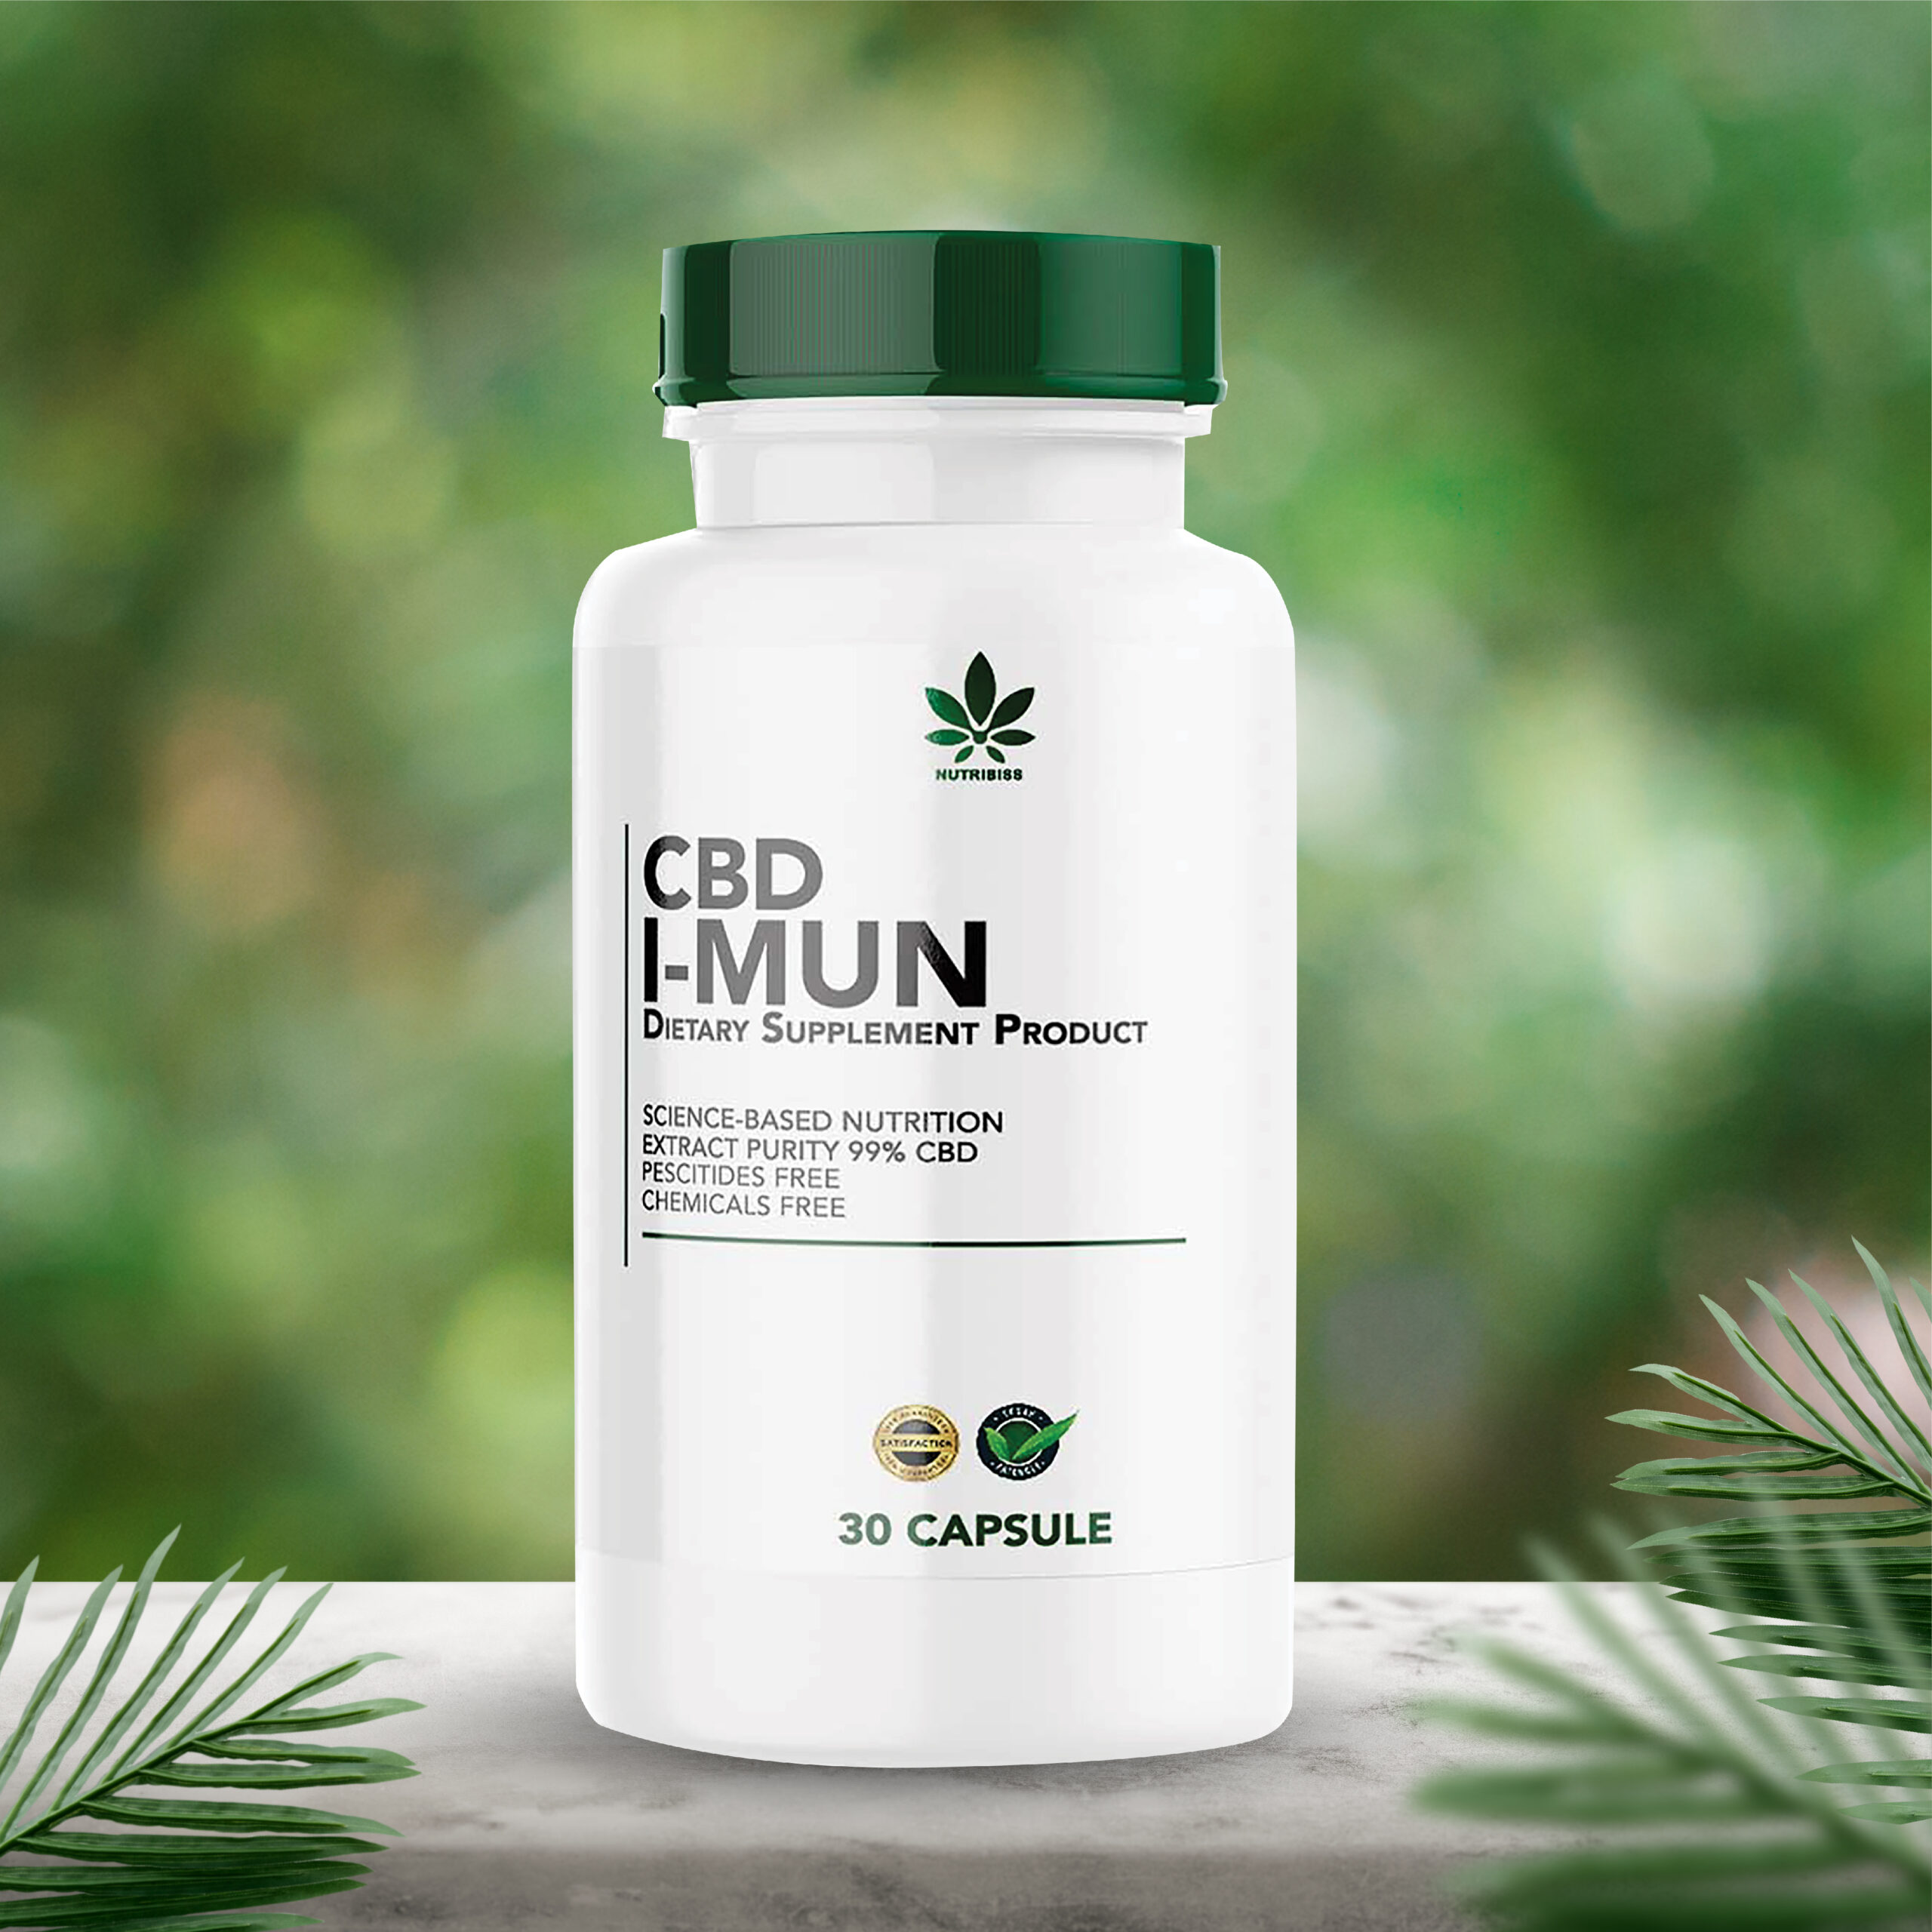 CBD I-MUN (Dietary Supplement Product Softgel Capsule)